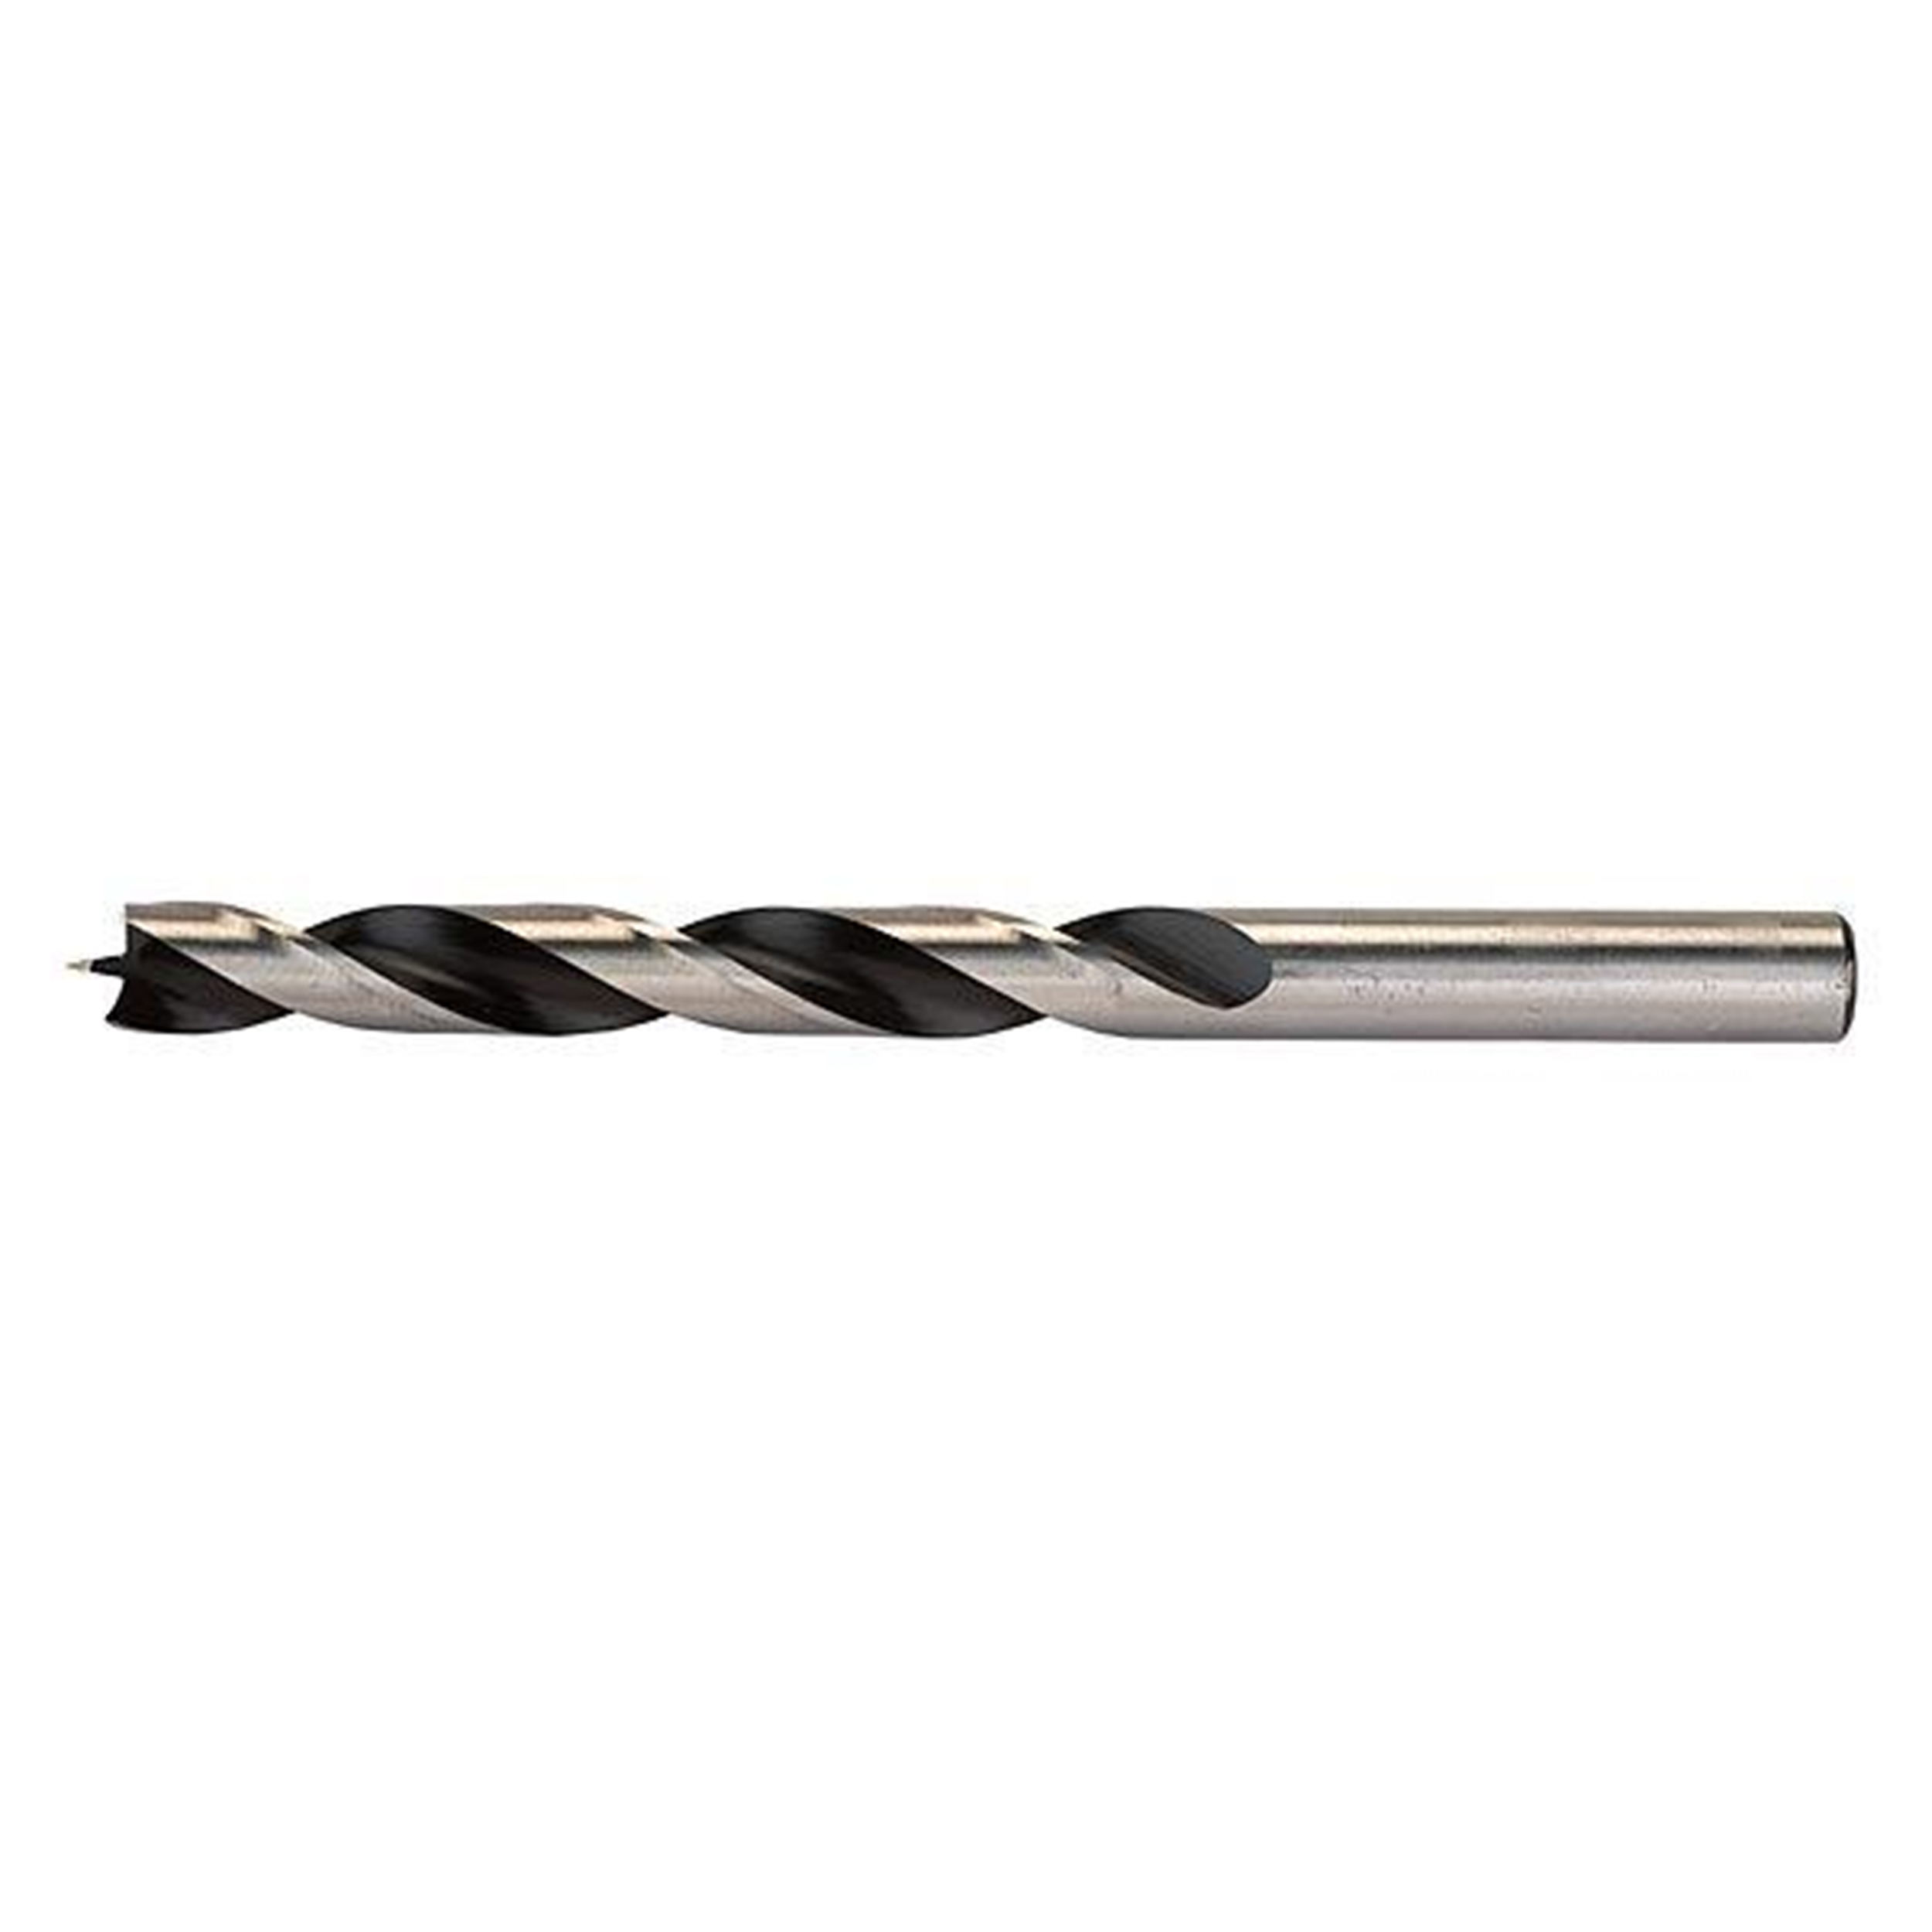 10mm Chrome-vanadium Steel Brad Point Drill Bit